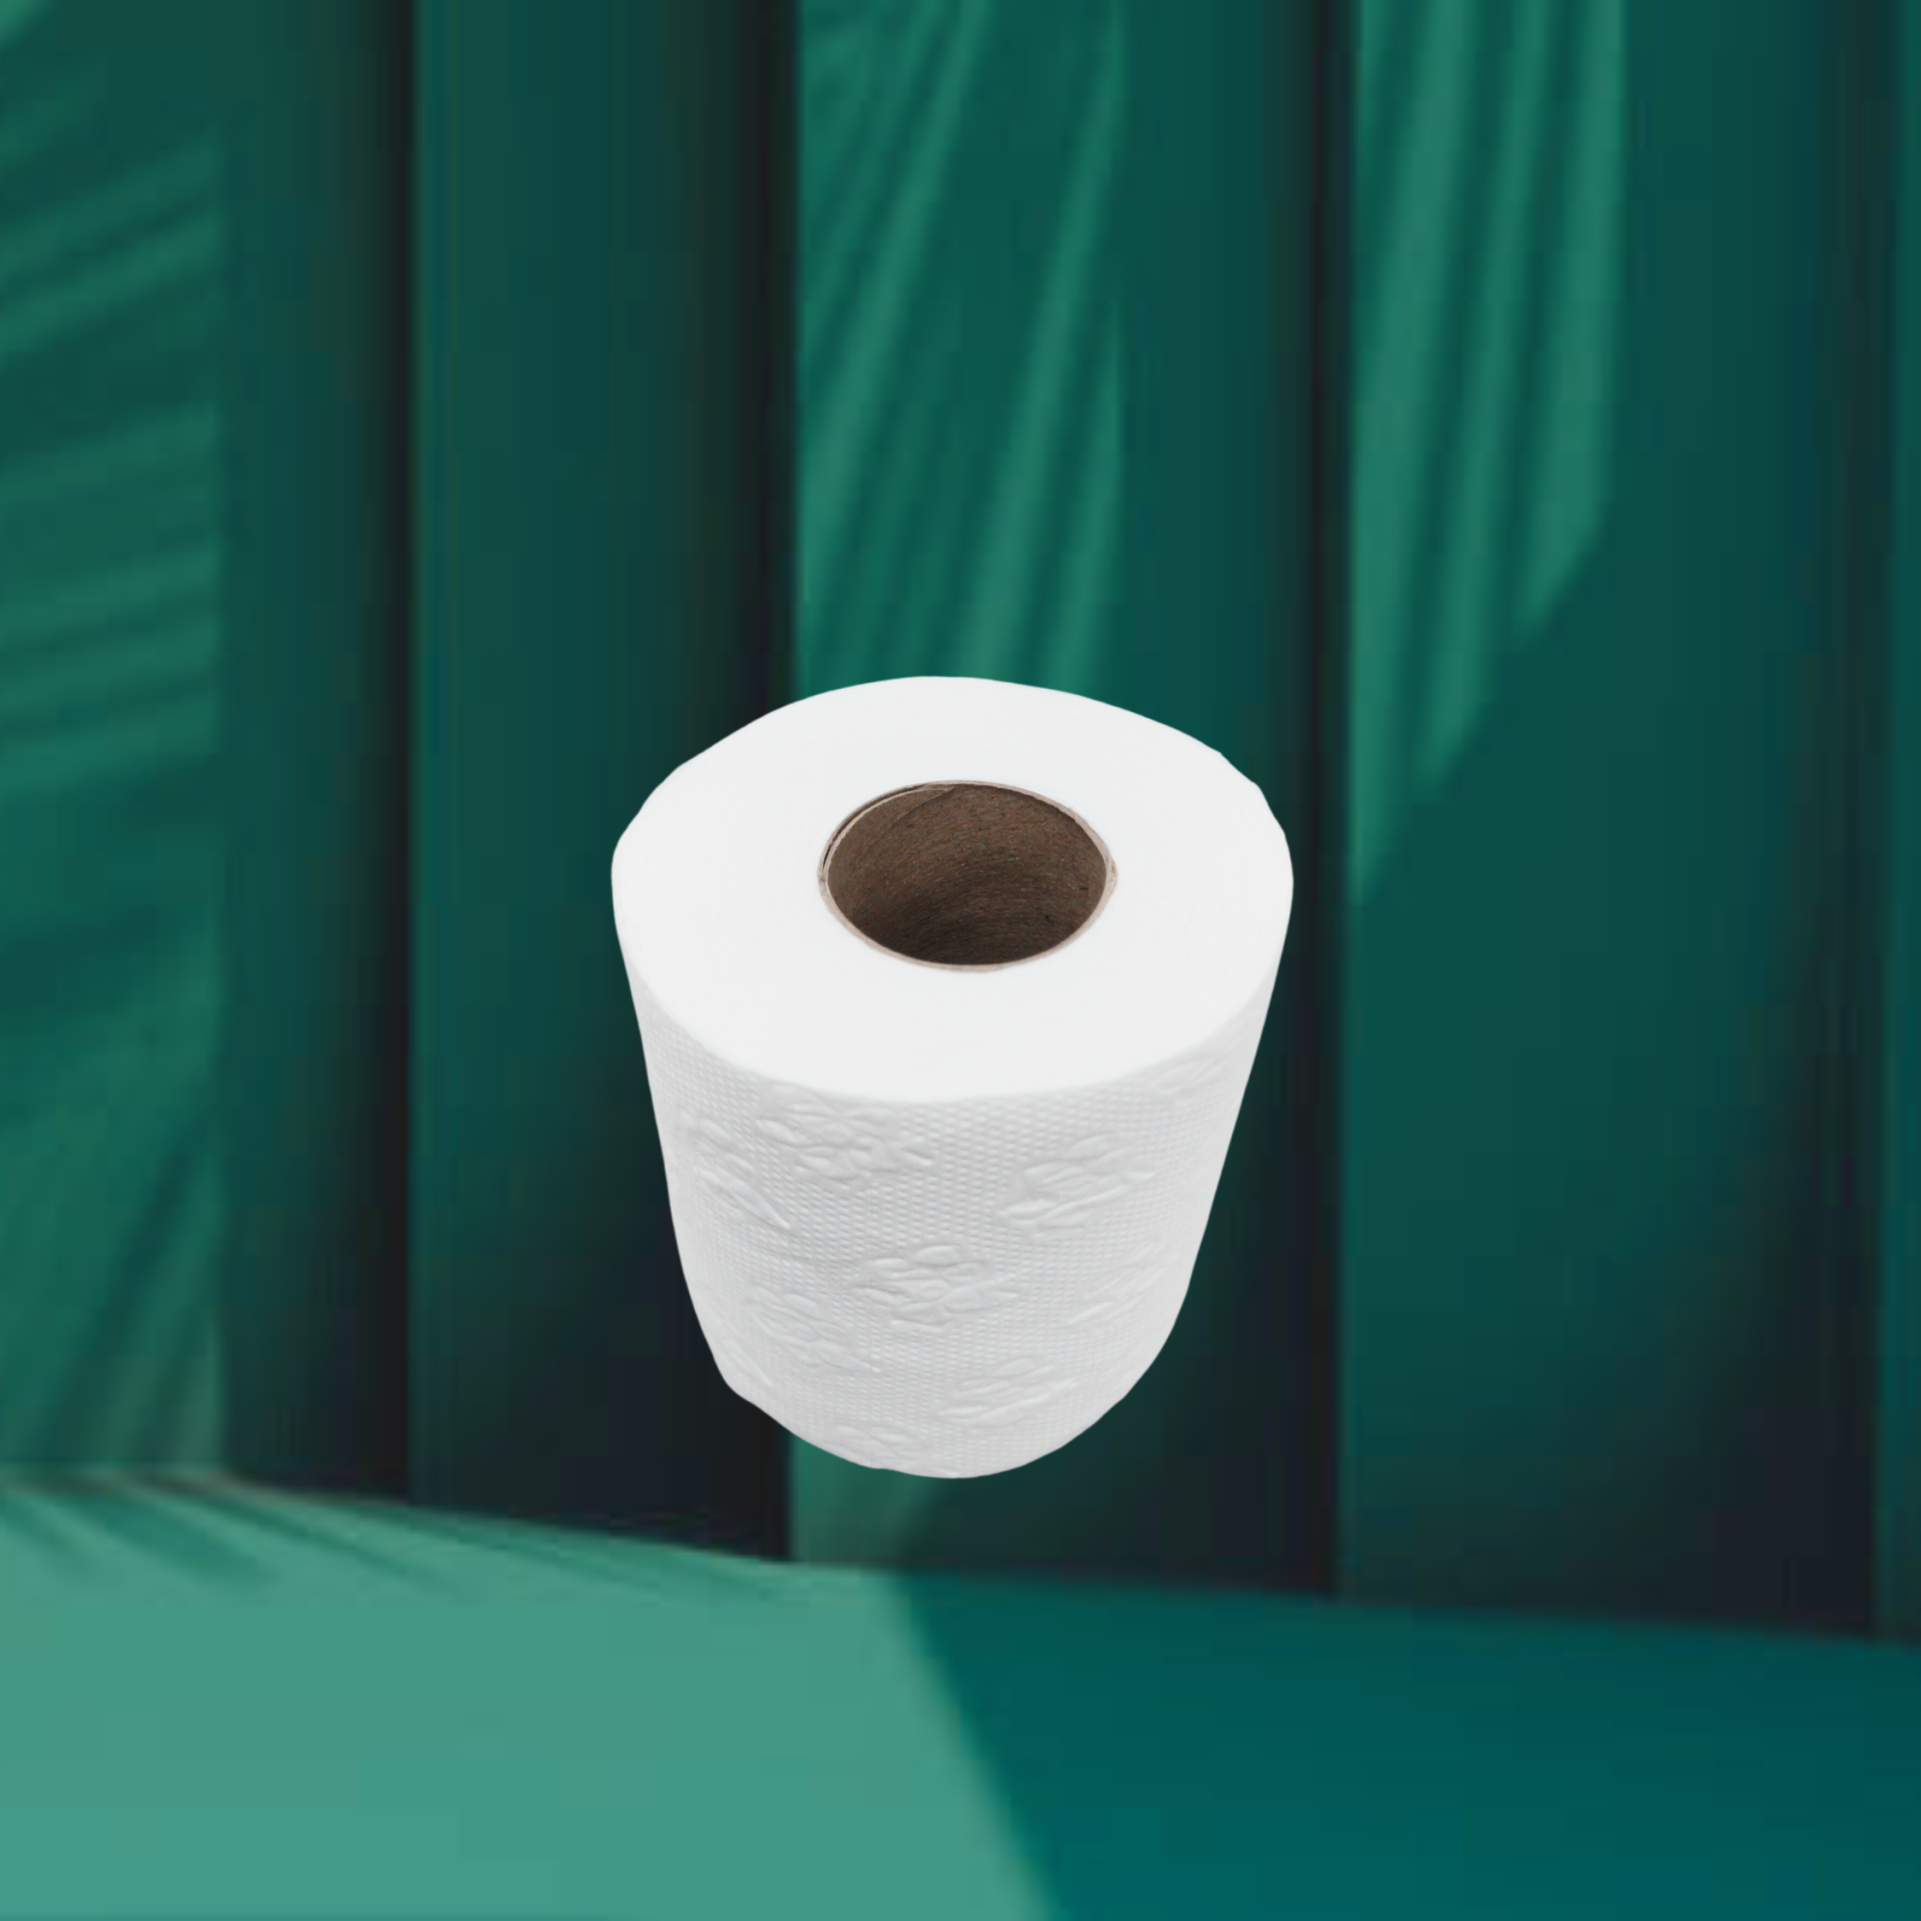 Small bathroom tissue